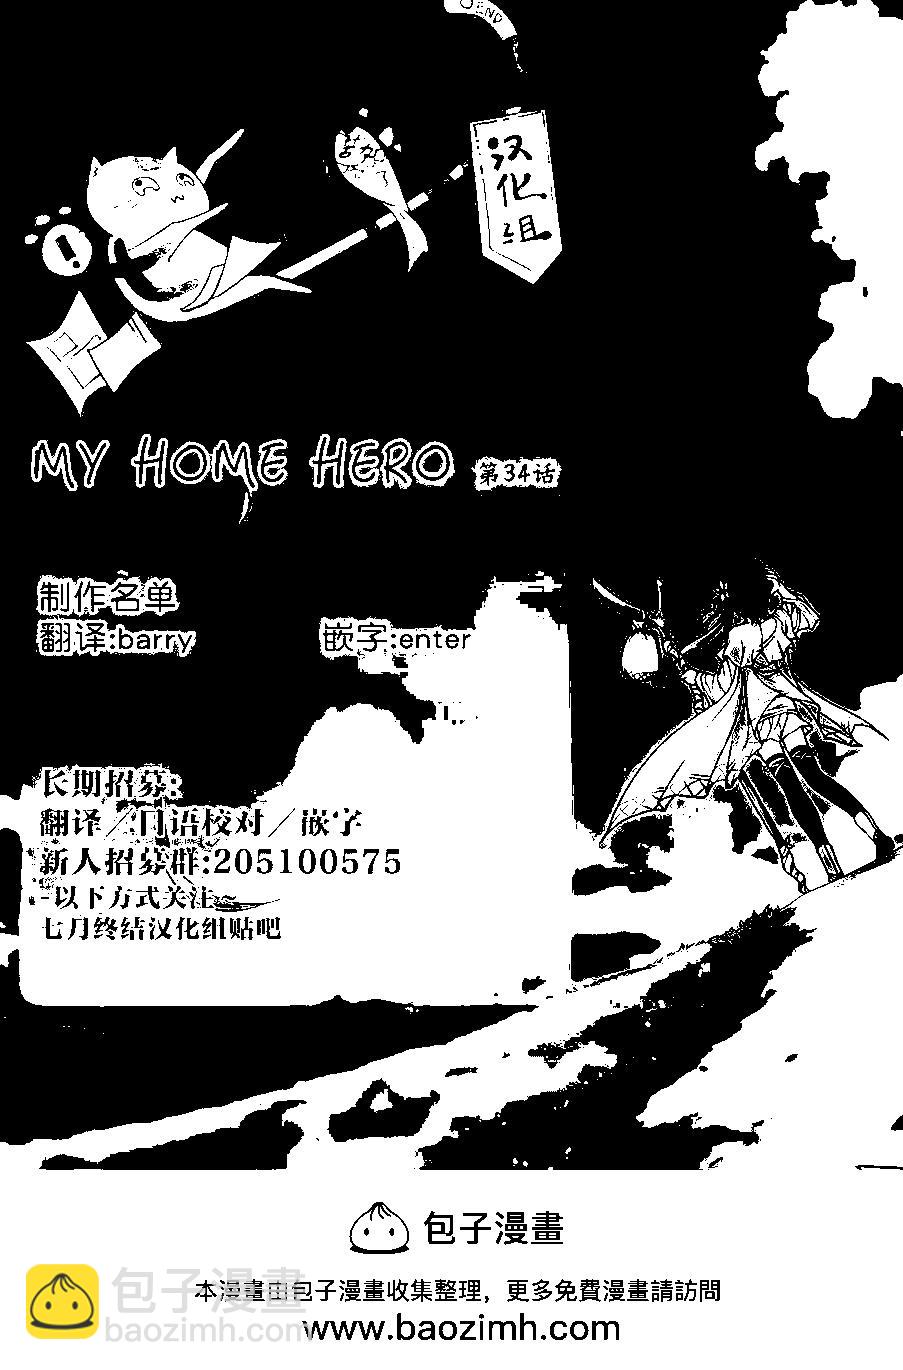 MY HOME HERO - 第34回 - 4